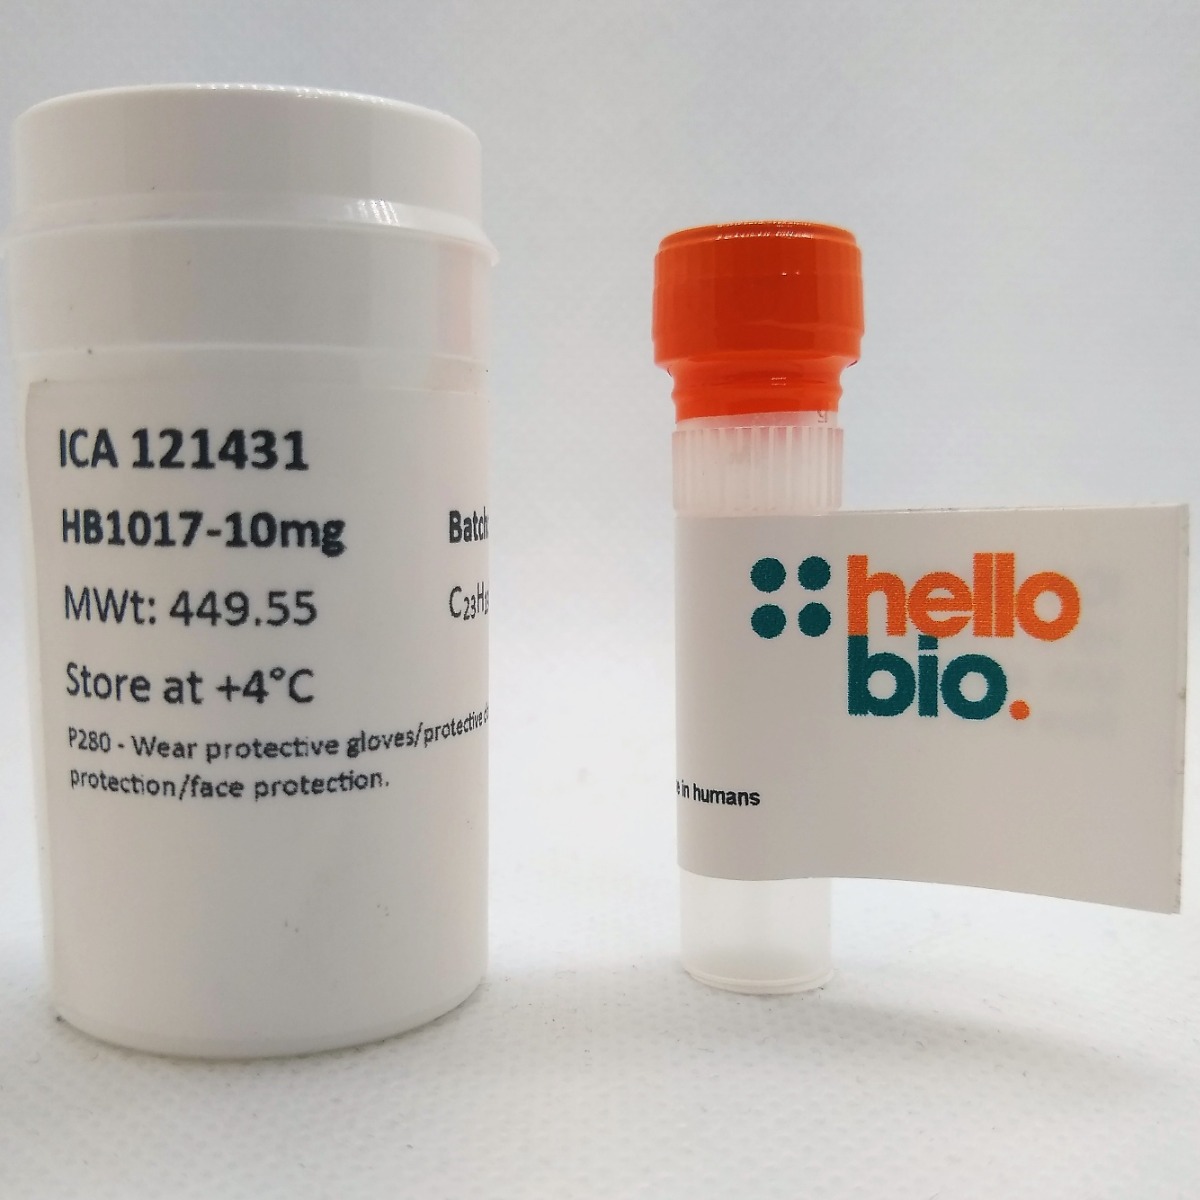 ICA 121431 product vial image | Hello Bio